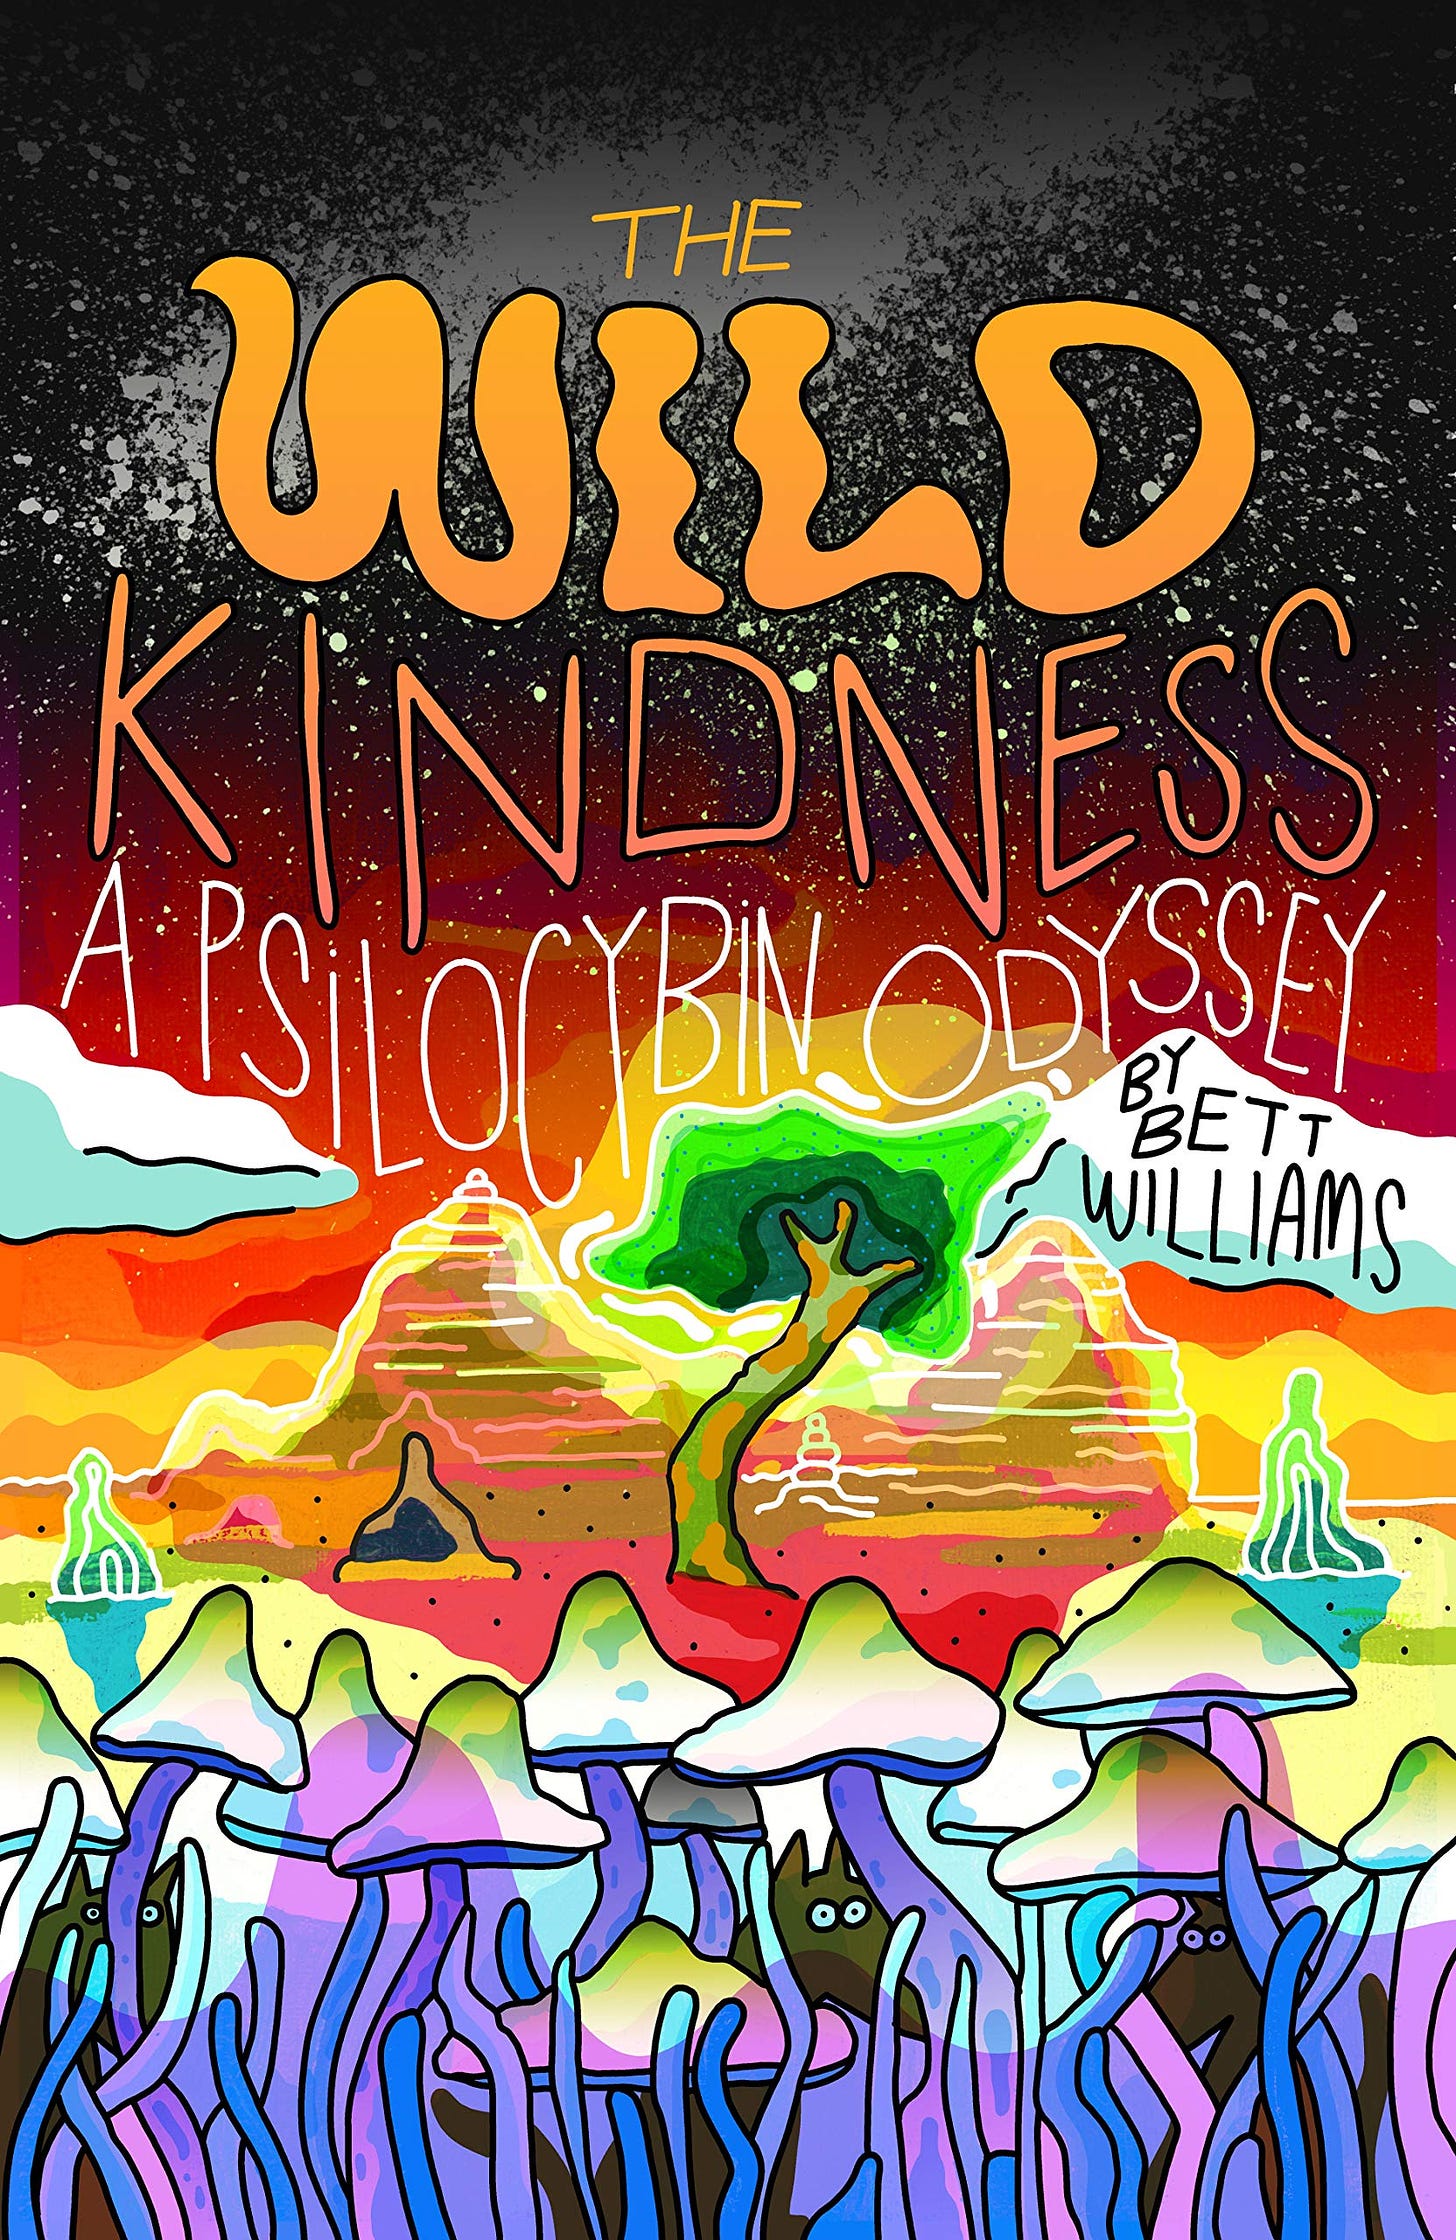 Amazon.com: The Wild Kindness: A Psilocybin Odyssey (9781948340311):  Williams, Bett: Books